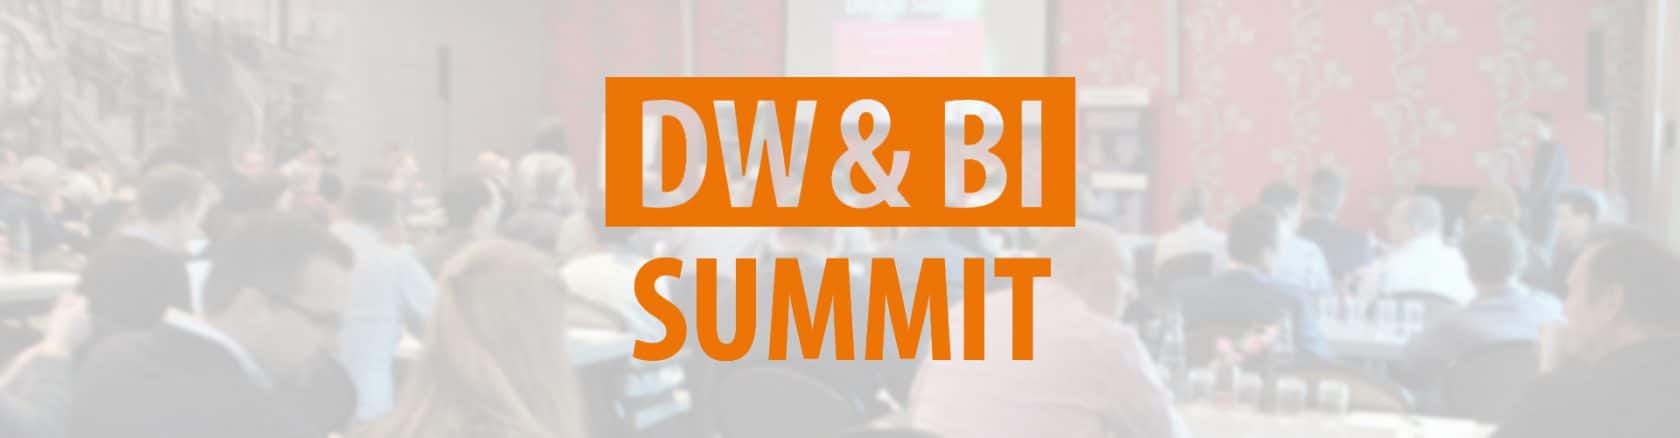 data warehousing,data warehouse, majken sander, e-mergo, timextender, discovery hub, dwbi summit. dw&bi summit,